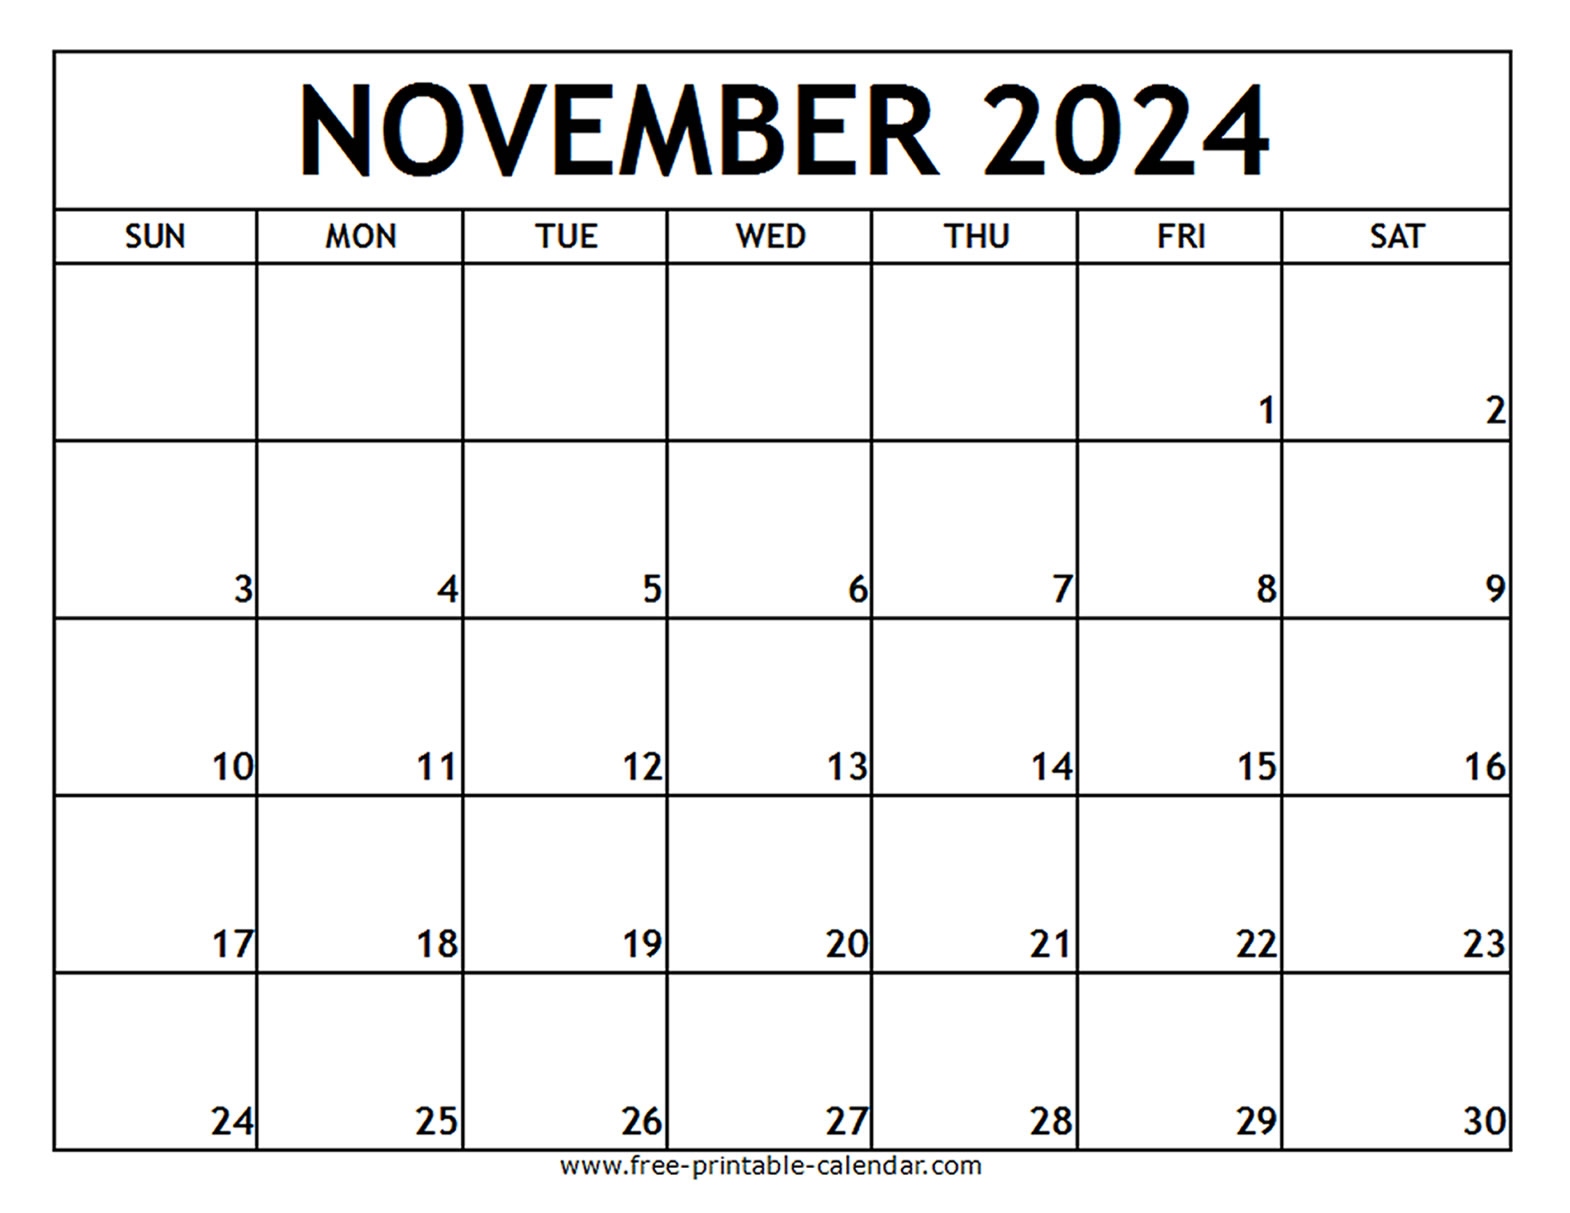 November 2024 Printable Calendar - Free-Printable-Calendar for Free Printable Calendar 2024 November December